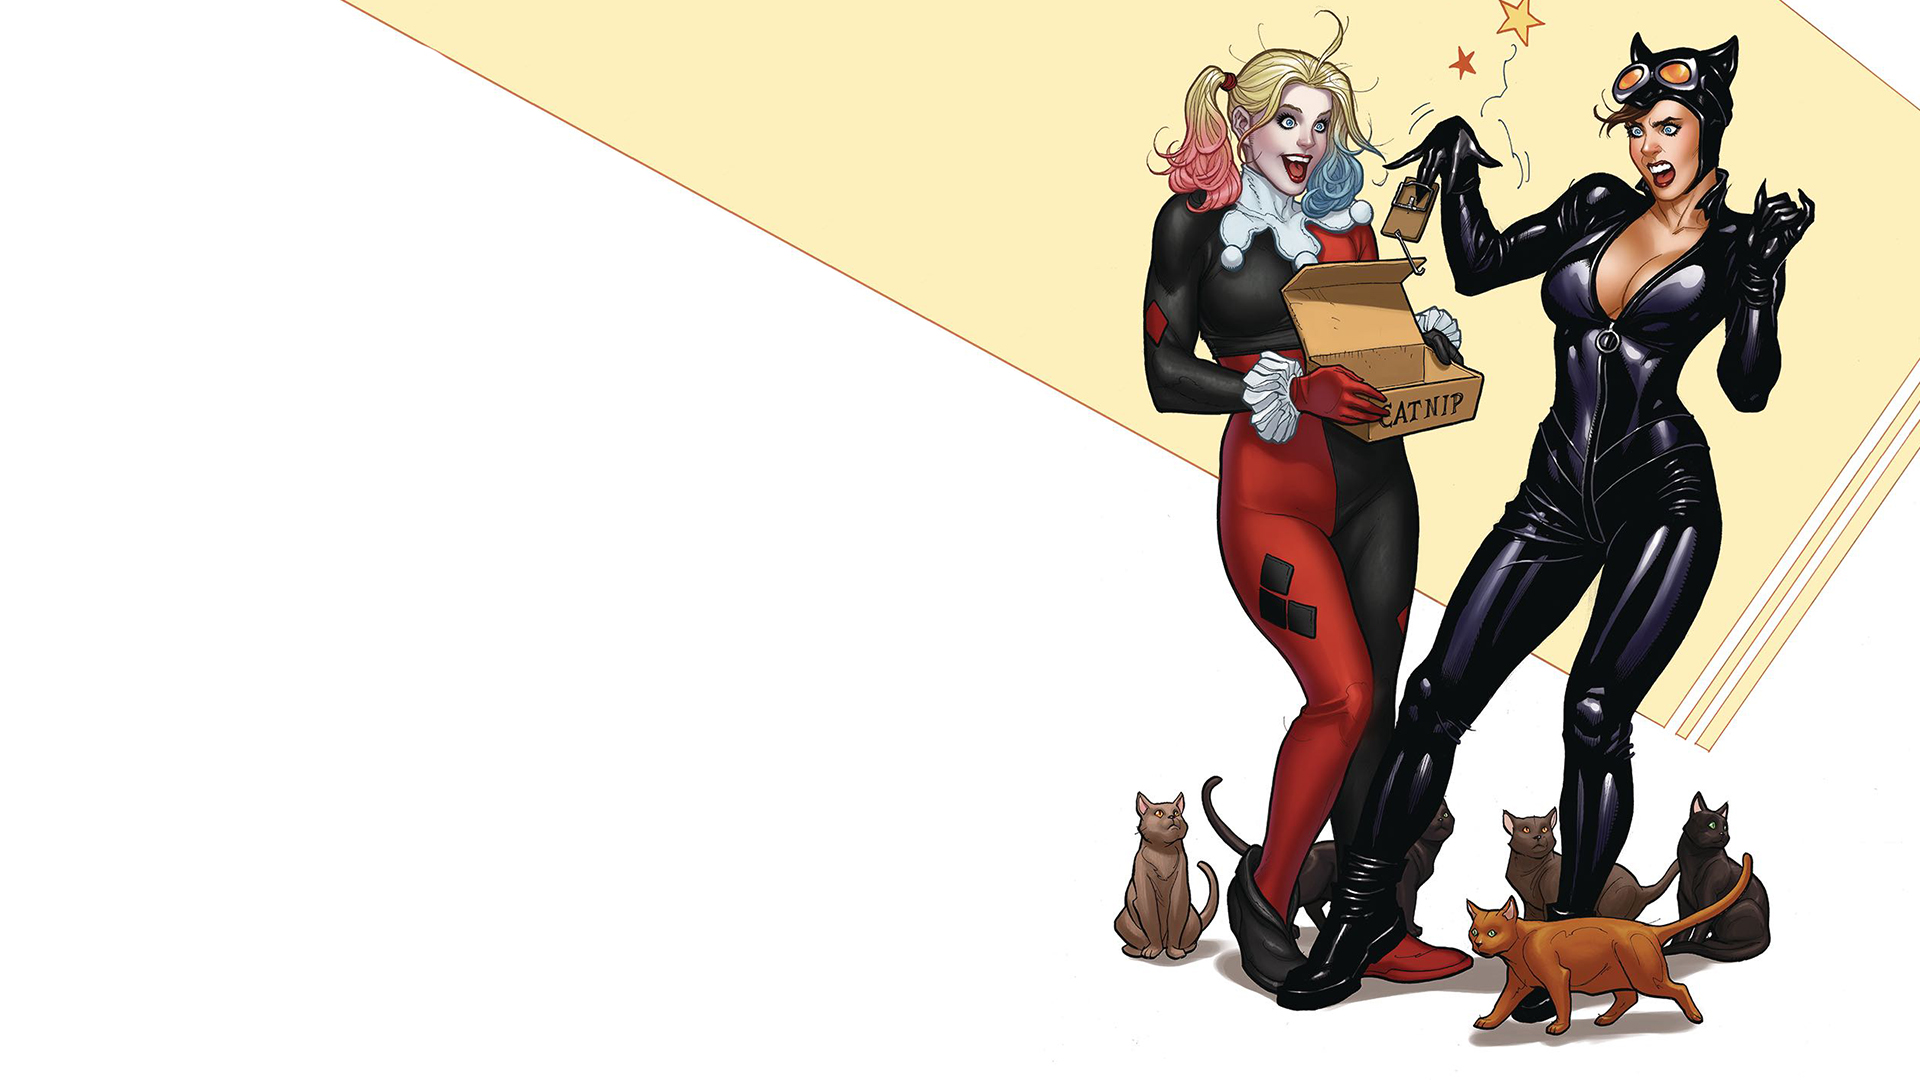 Descarga gratuita de fondo de pantalla para móvil de Historietas, Harley Quinn, Dc Comics, Gatúbela.